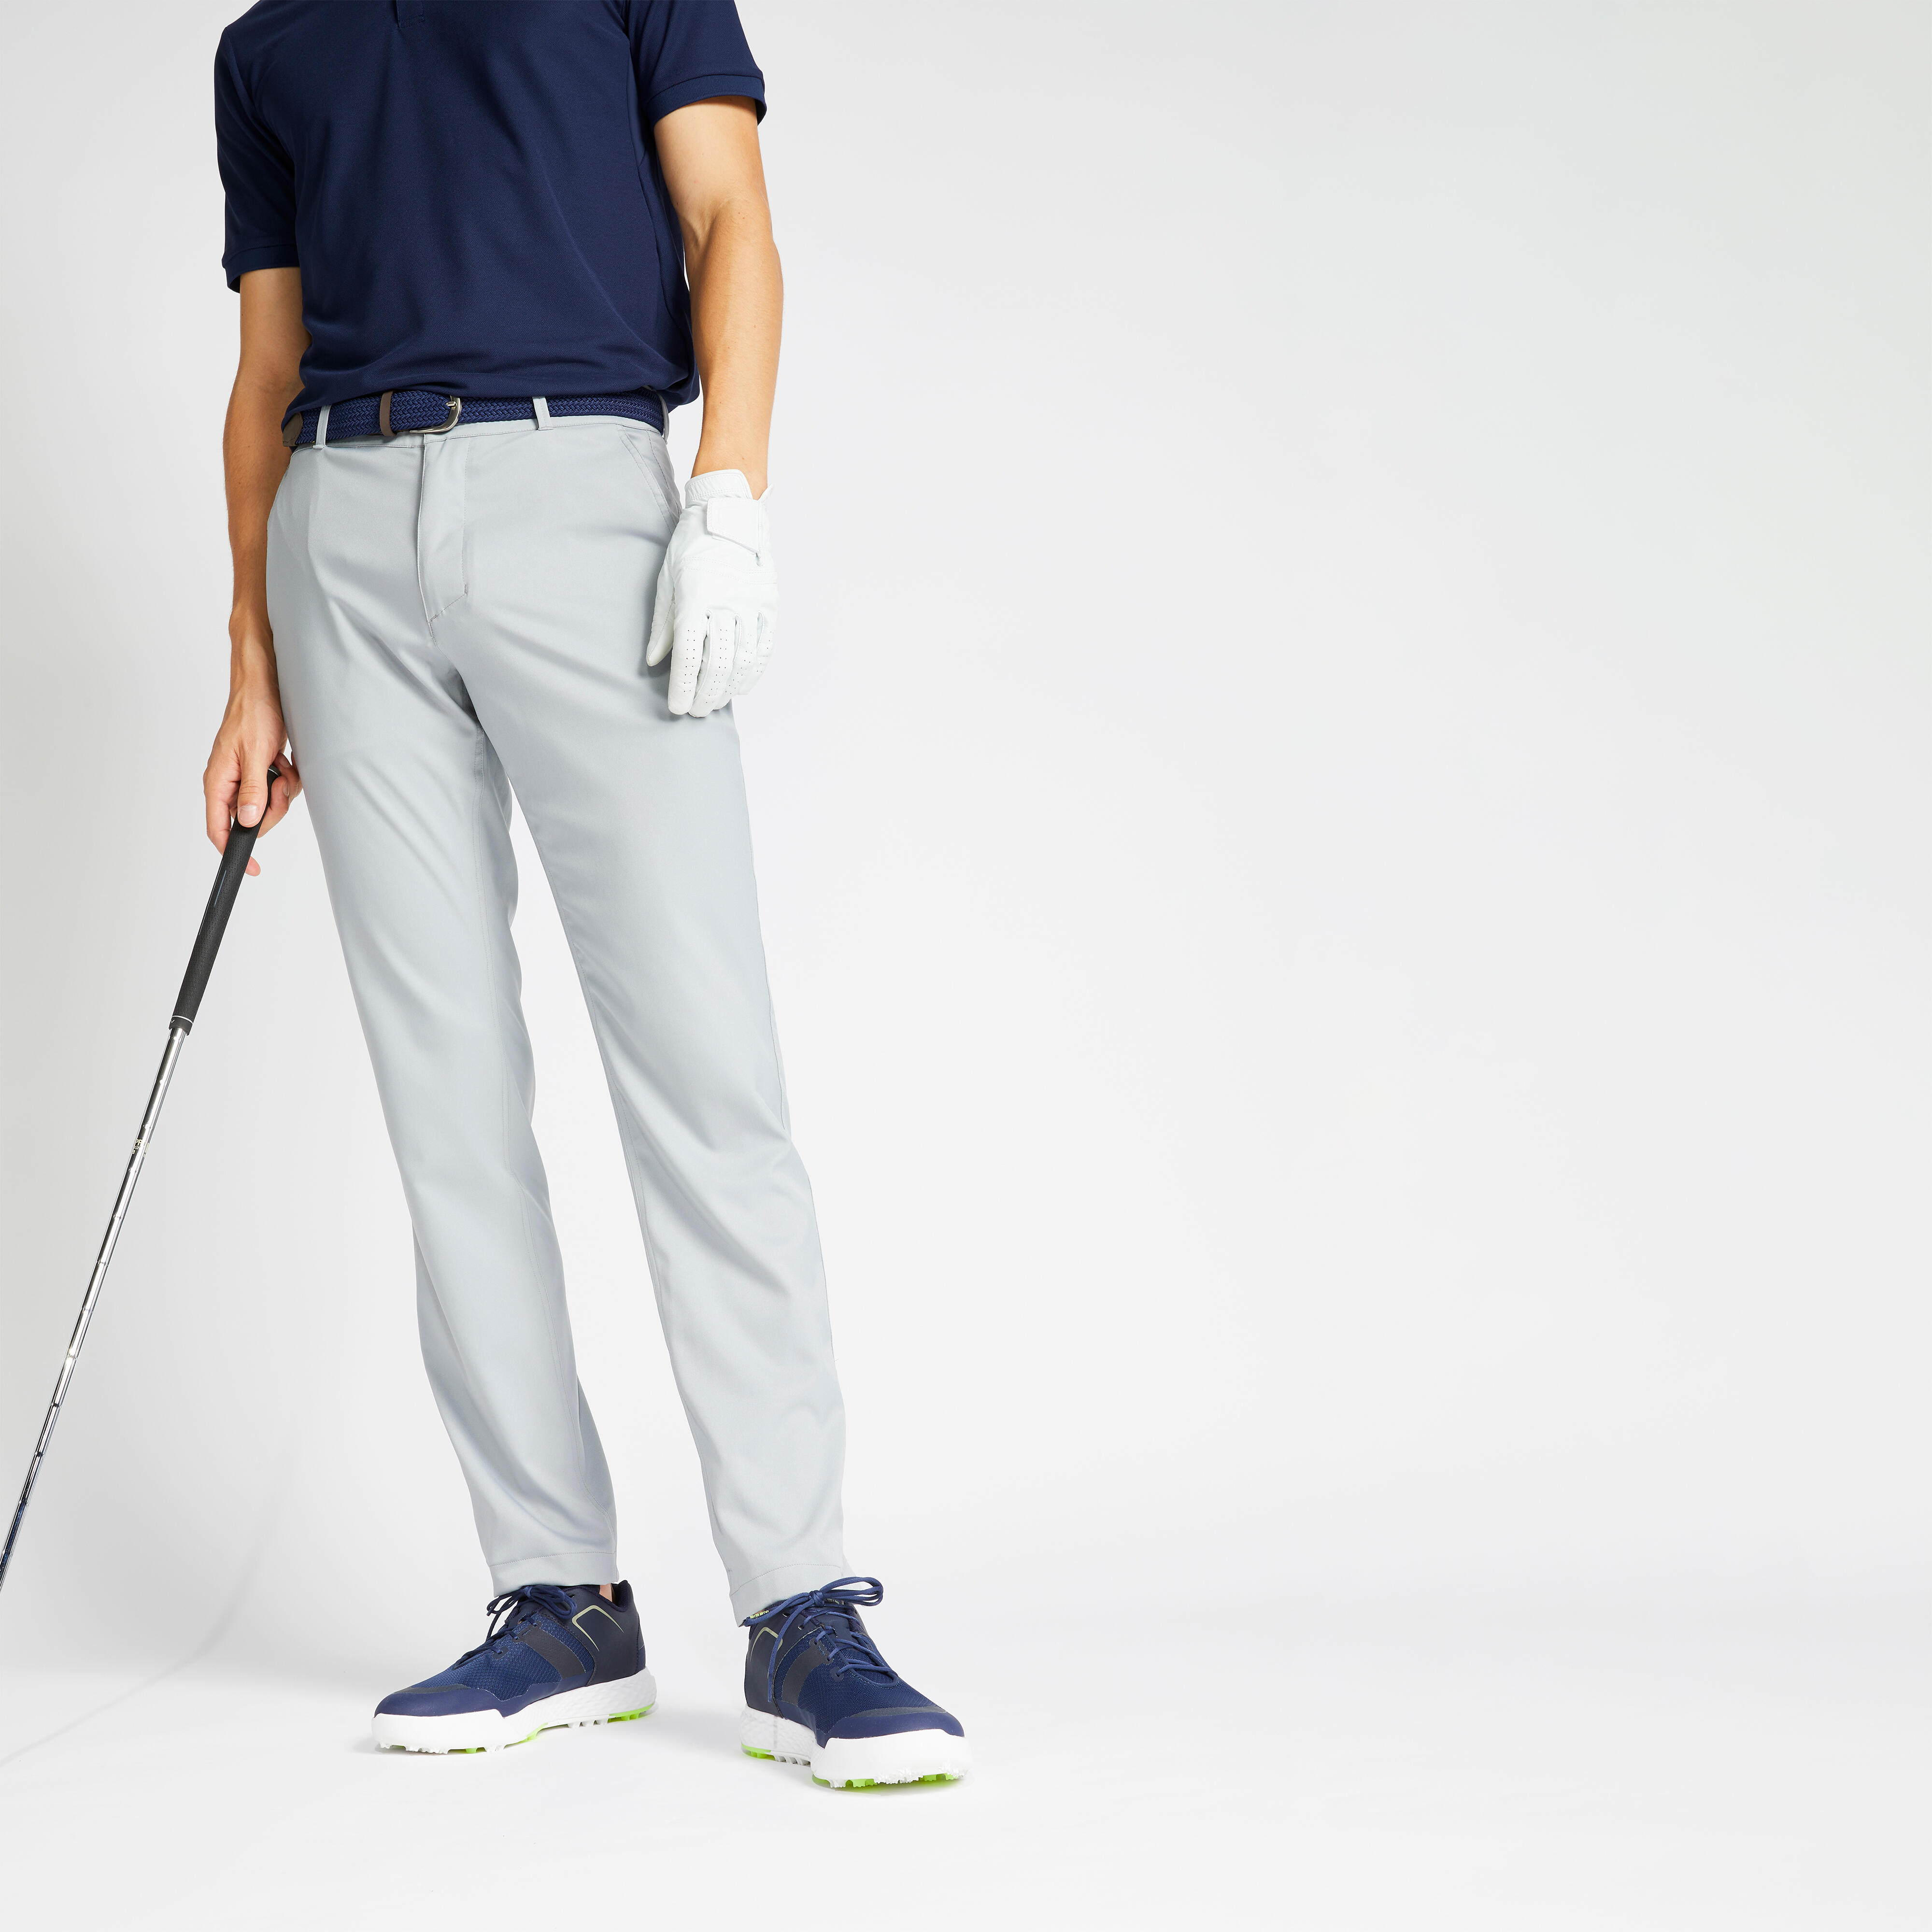 Trouser  Golfedgeindiacom  Indias Favourite Online Golf Store  golfedge